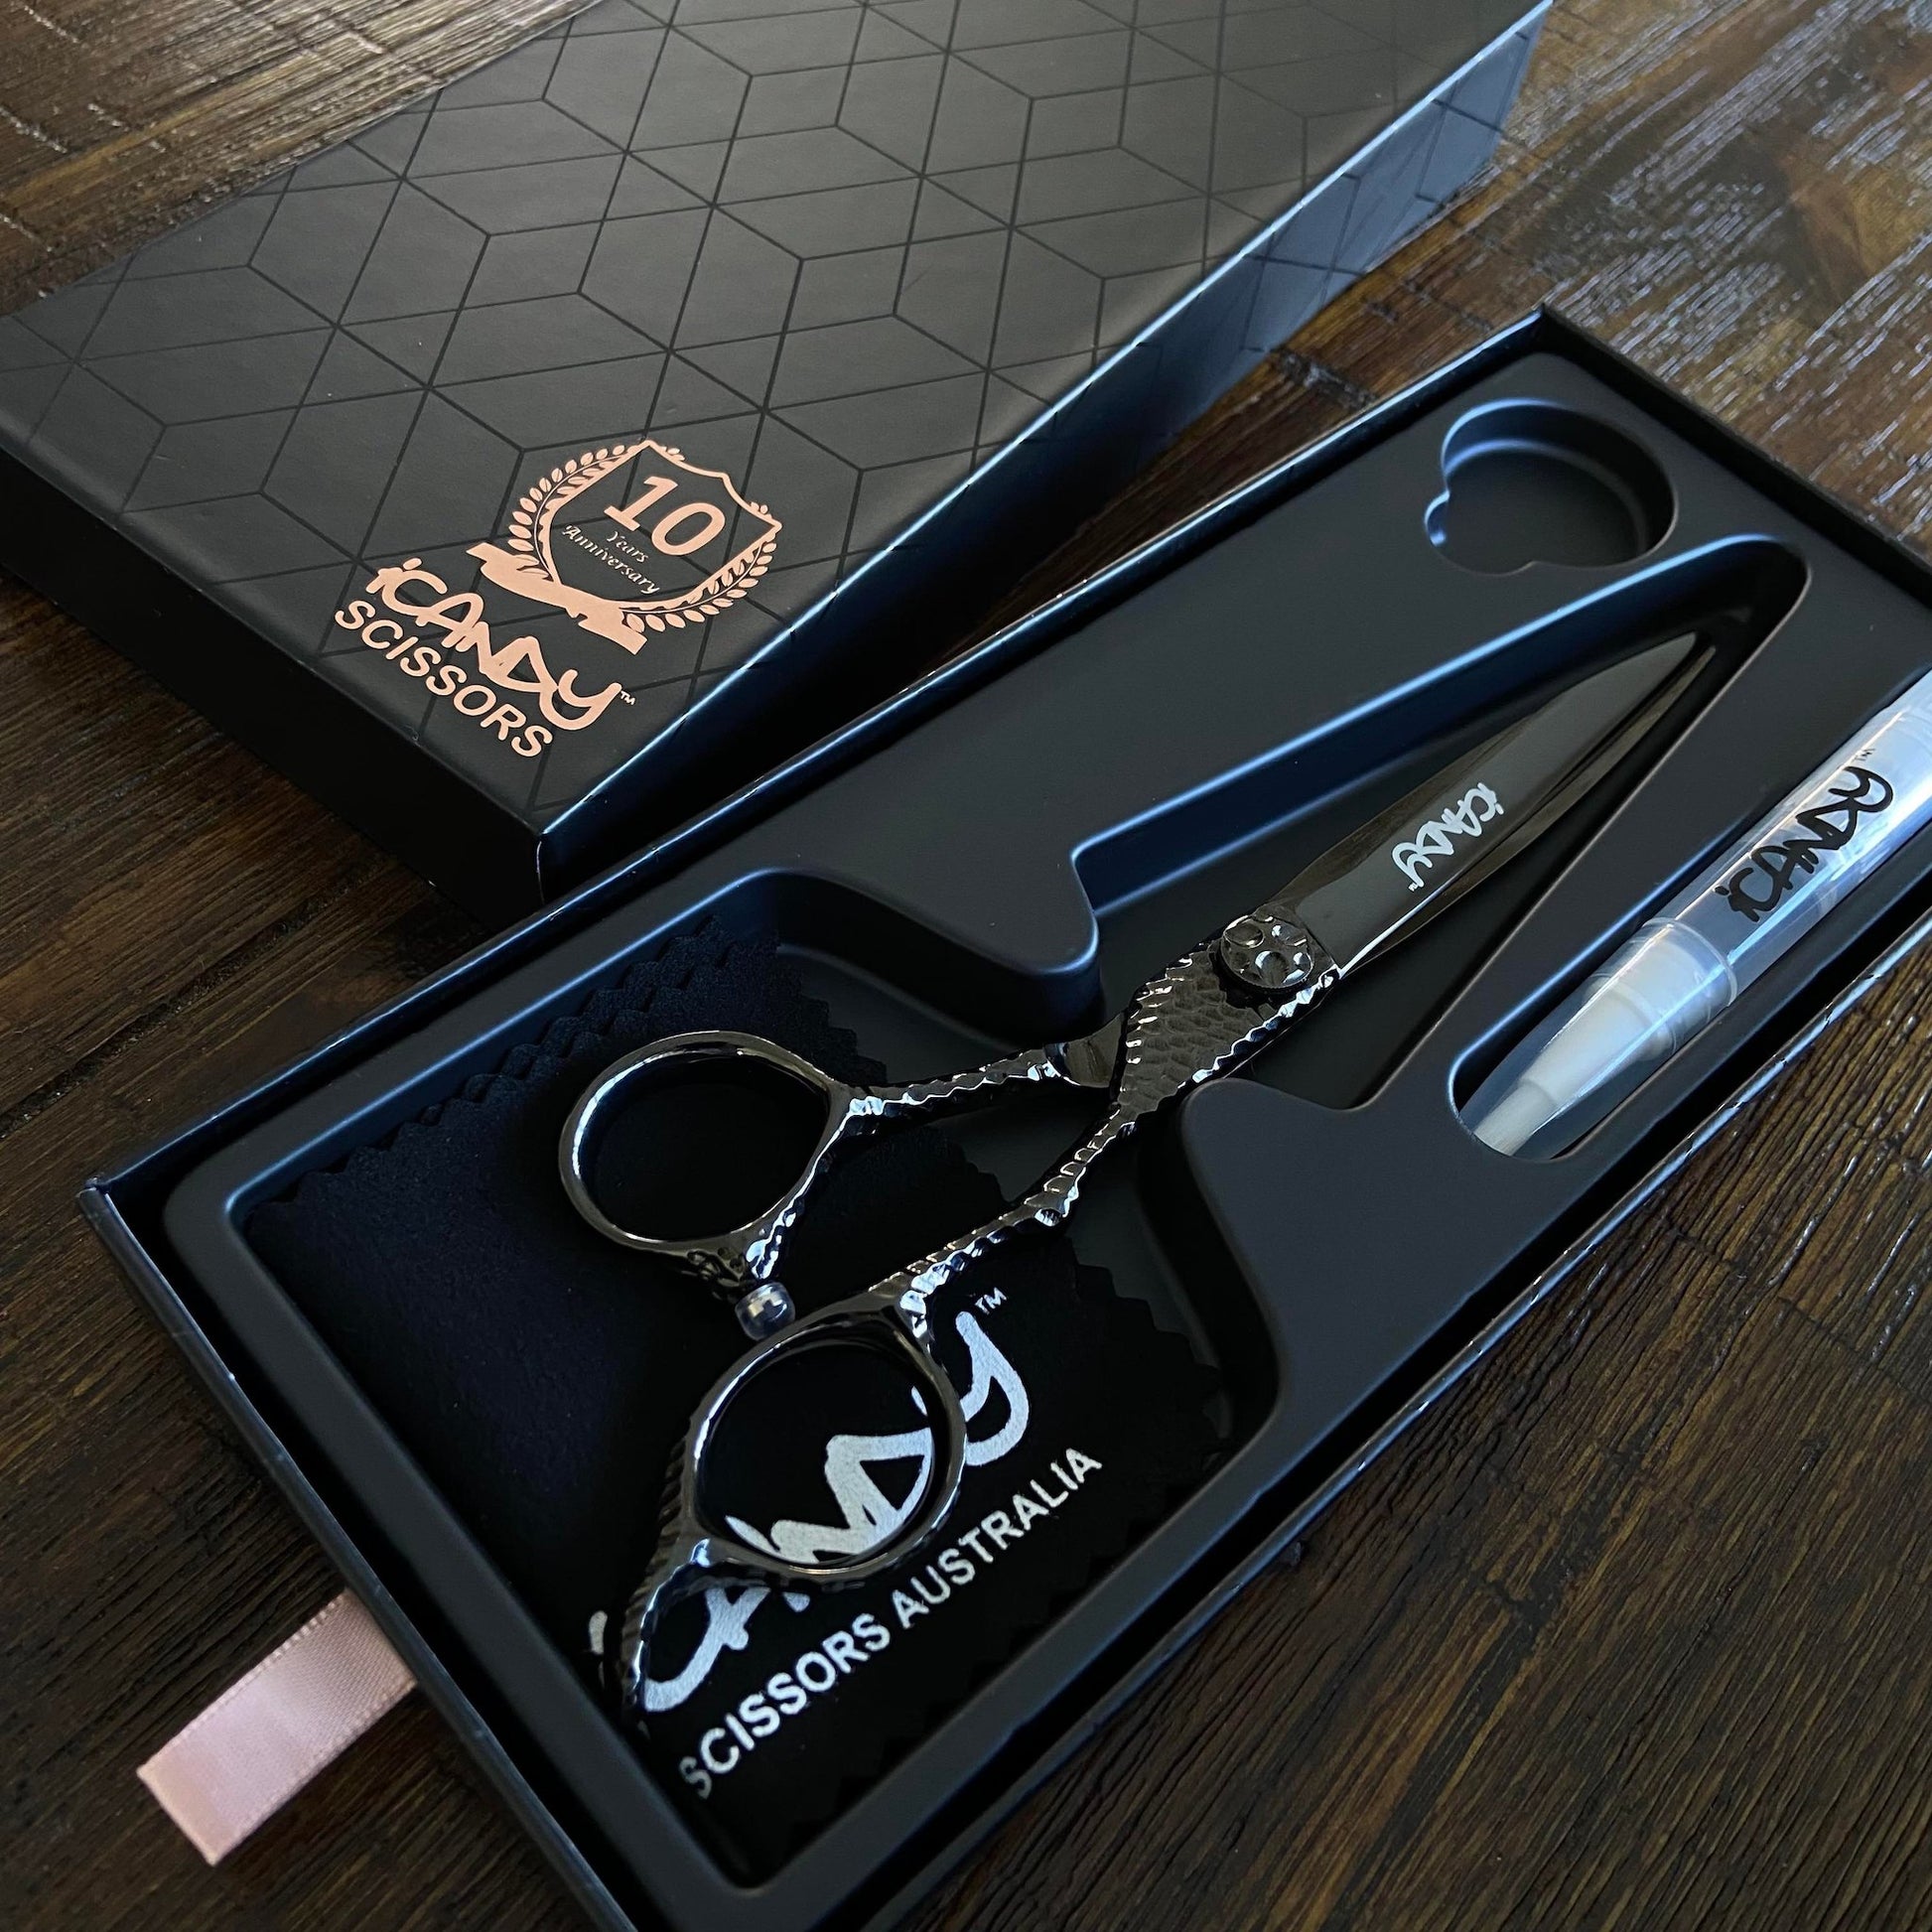 iCandy Sword Pro Midnight Black VG10 6.6" 10 Years Anniversary Edition Scissors Open Box 